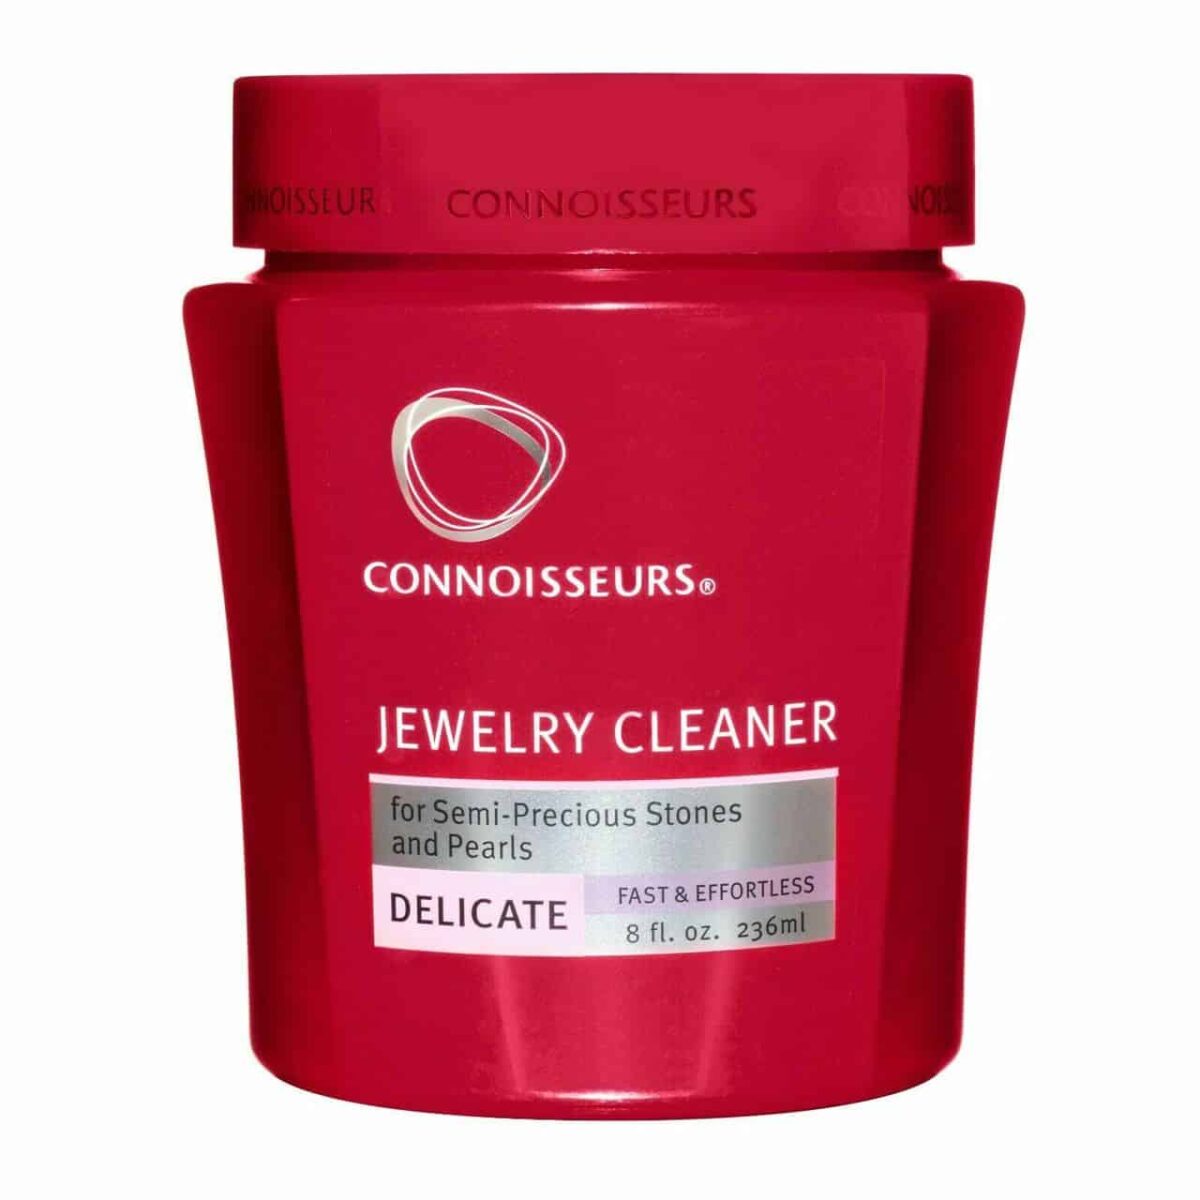 Connoisseurs DELICATE Jewellery Cleaner Polishing Dip Gold Platinum Diamond 193877530055 - Maddisons UK